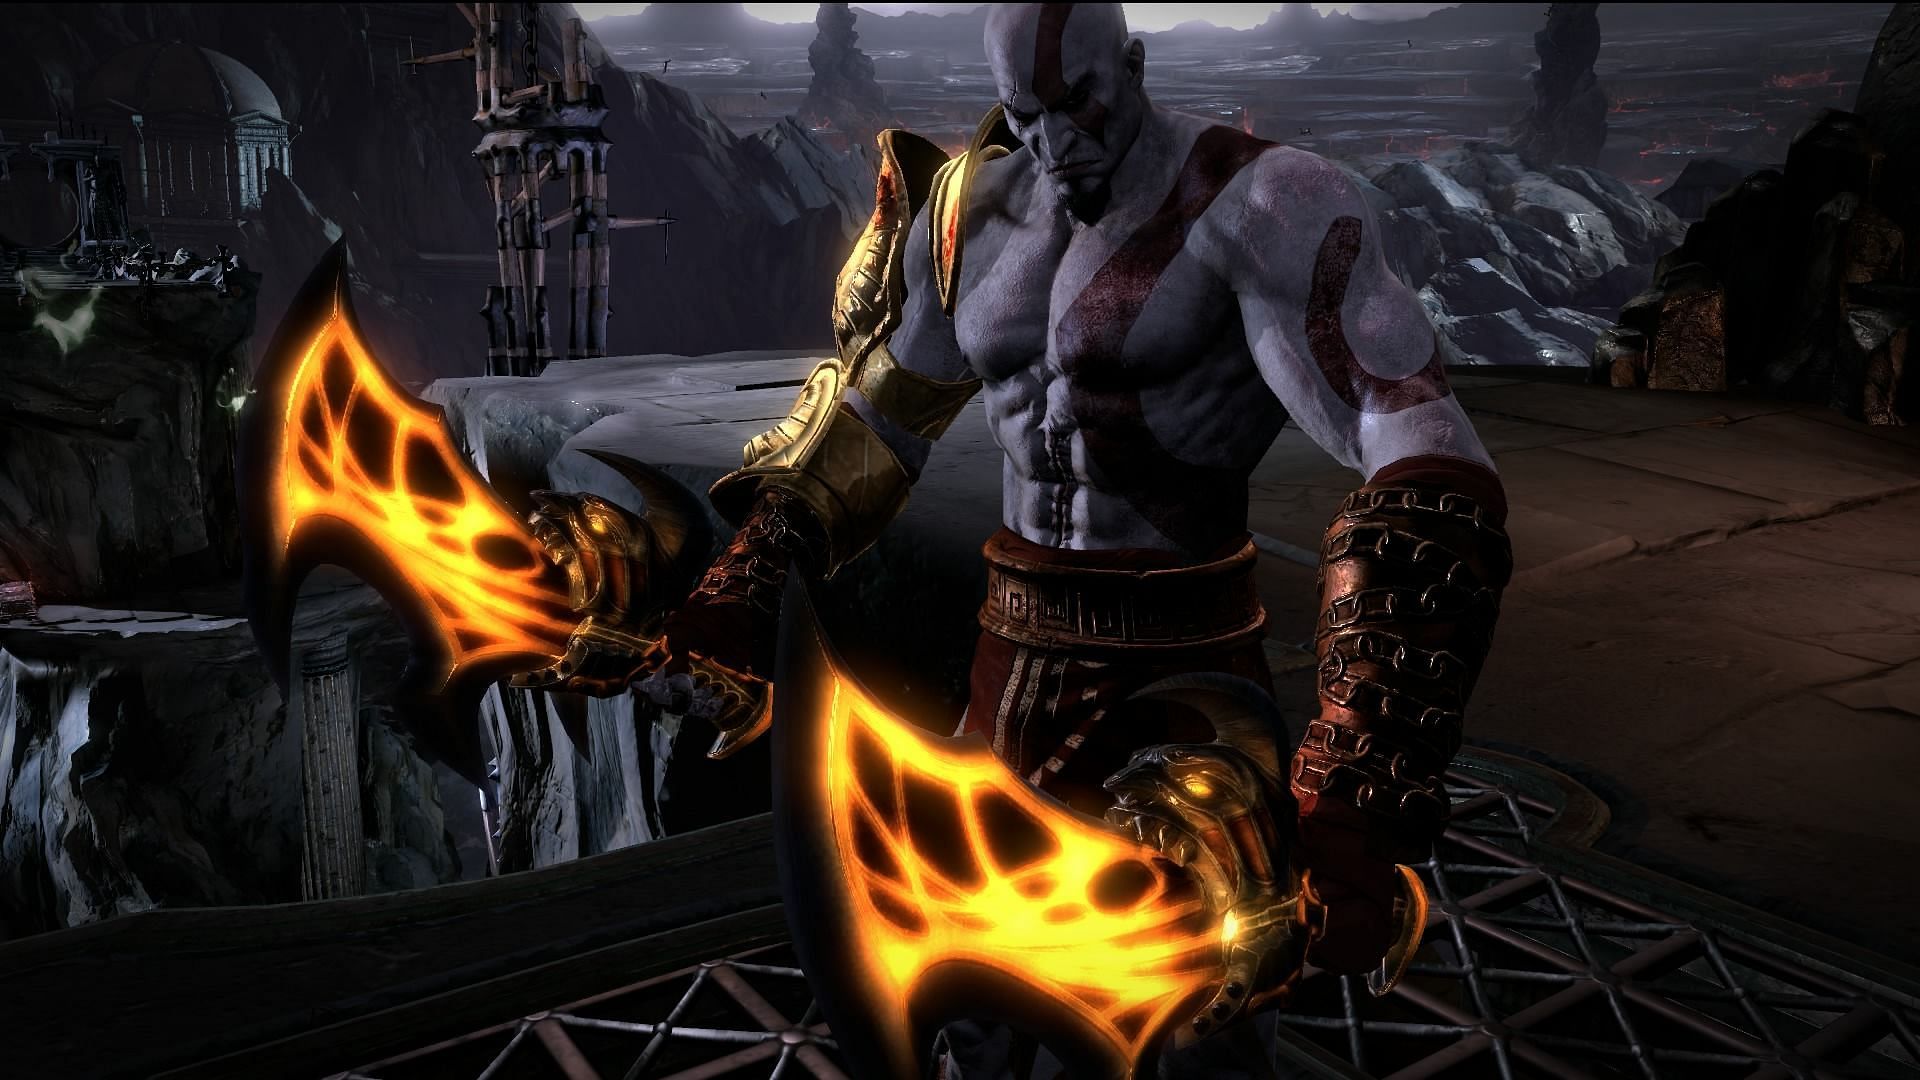 Kratos, the God of War III protagonist, is killed in the final scene (image via Santa Monica Studios)